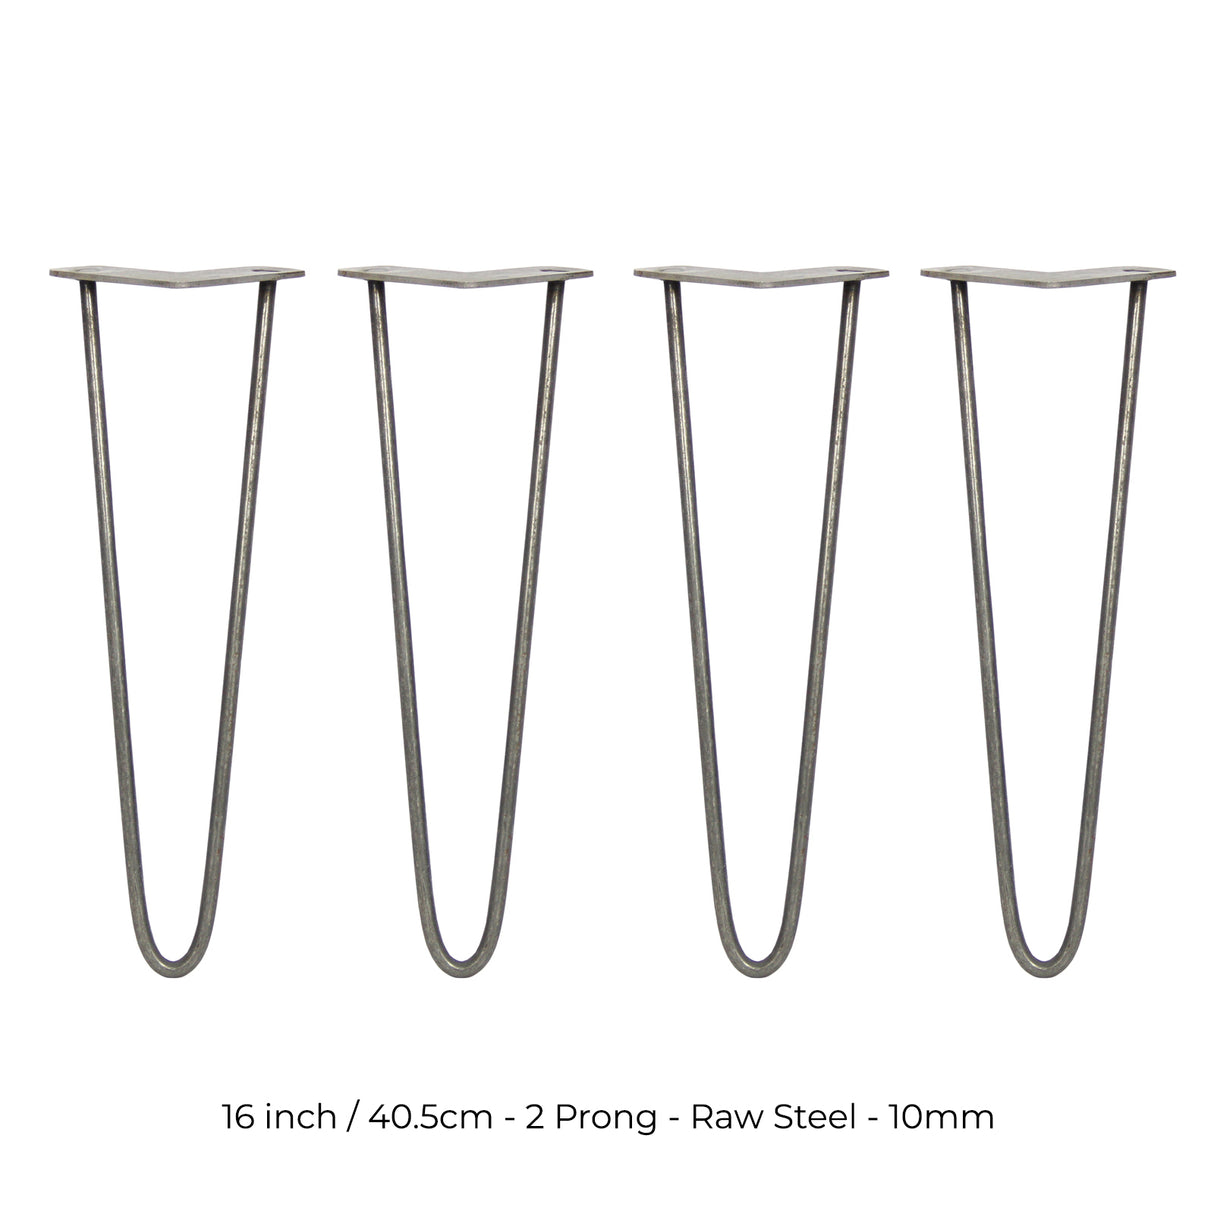 4 x 16" Hairpin Legs - 2 Prong - 10mm - Raw Steel